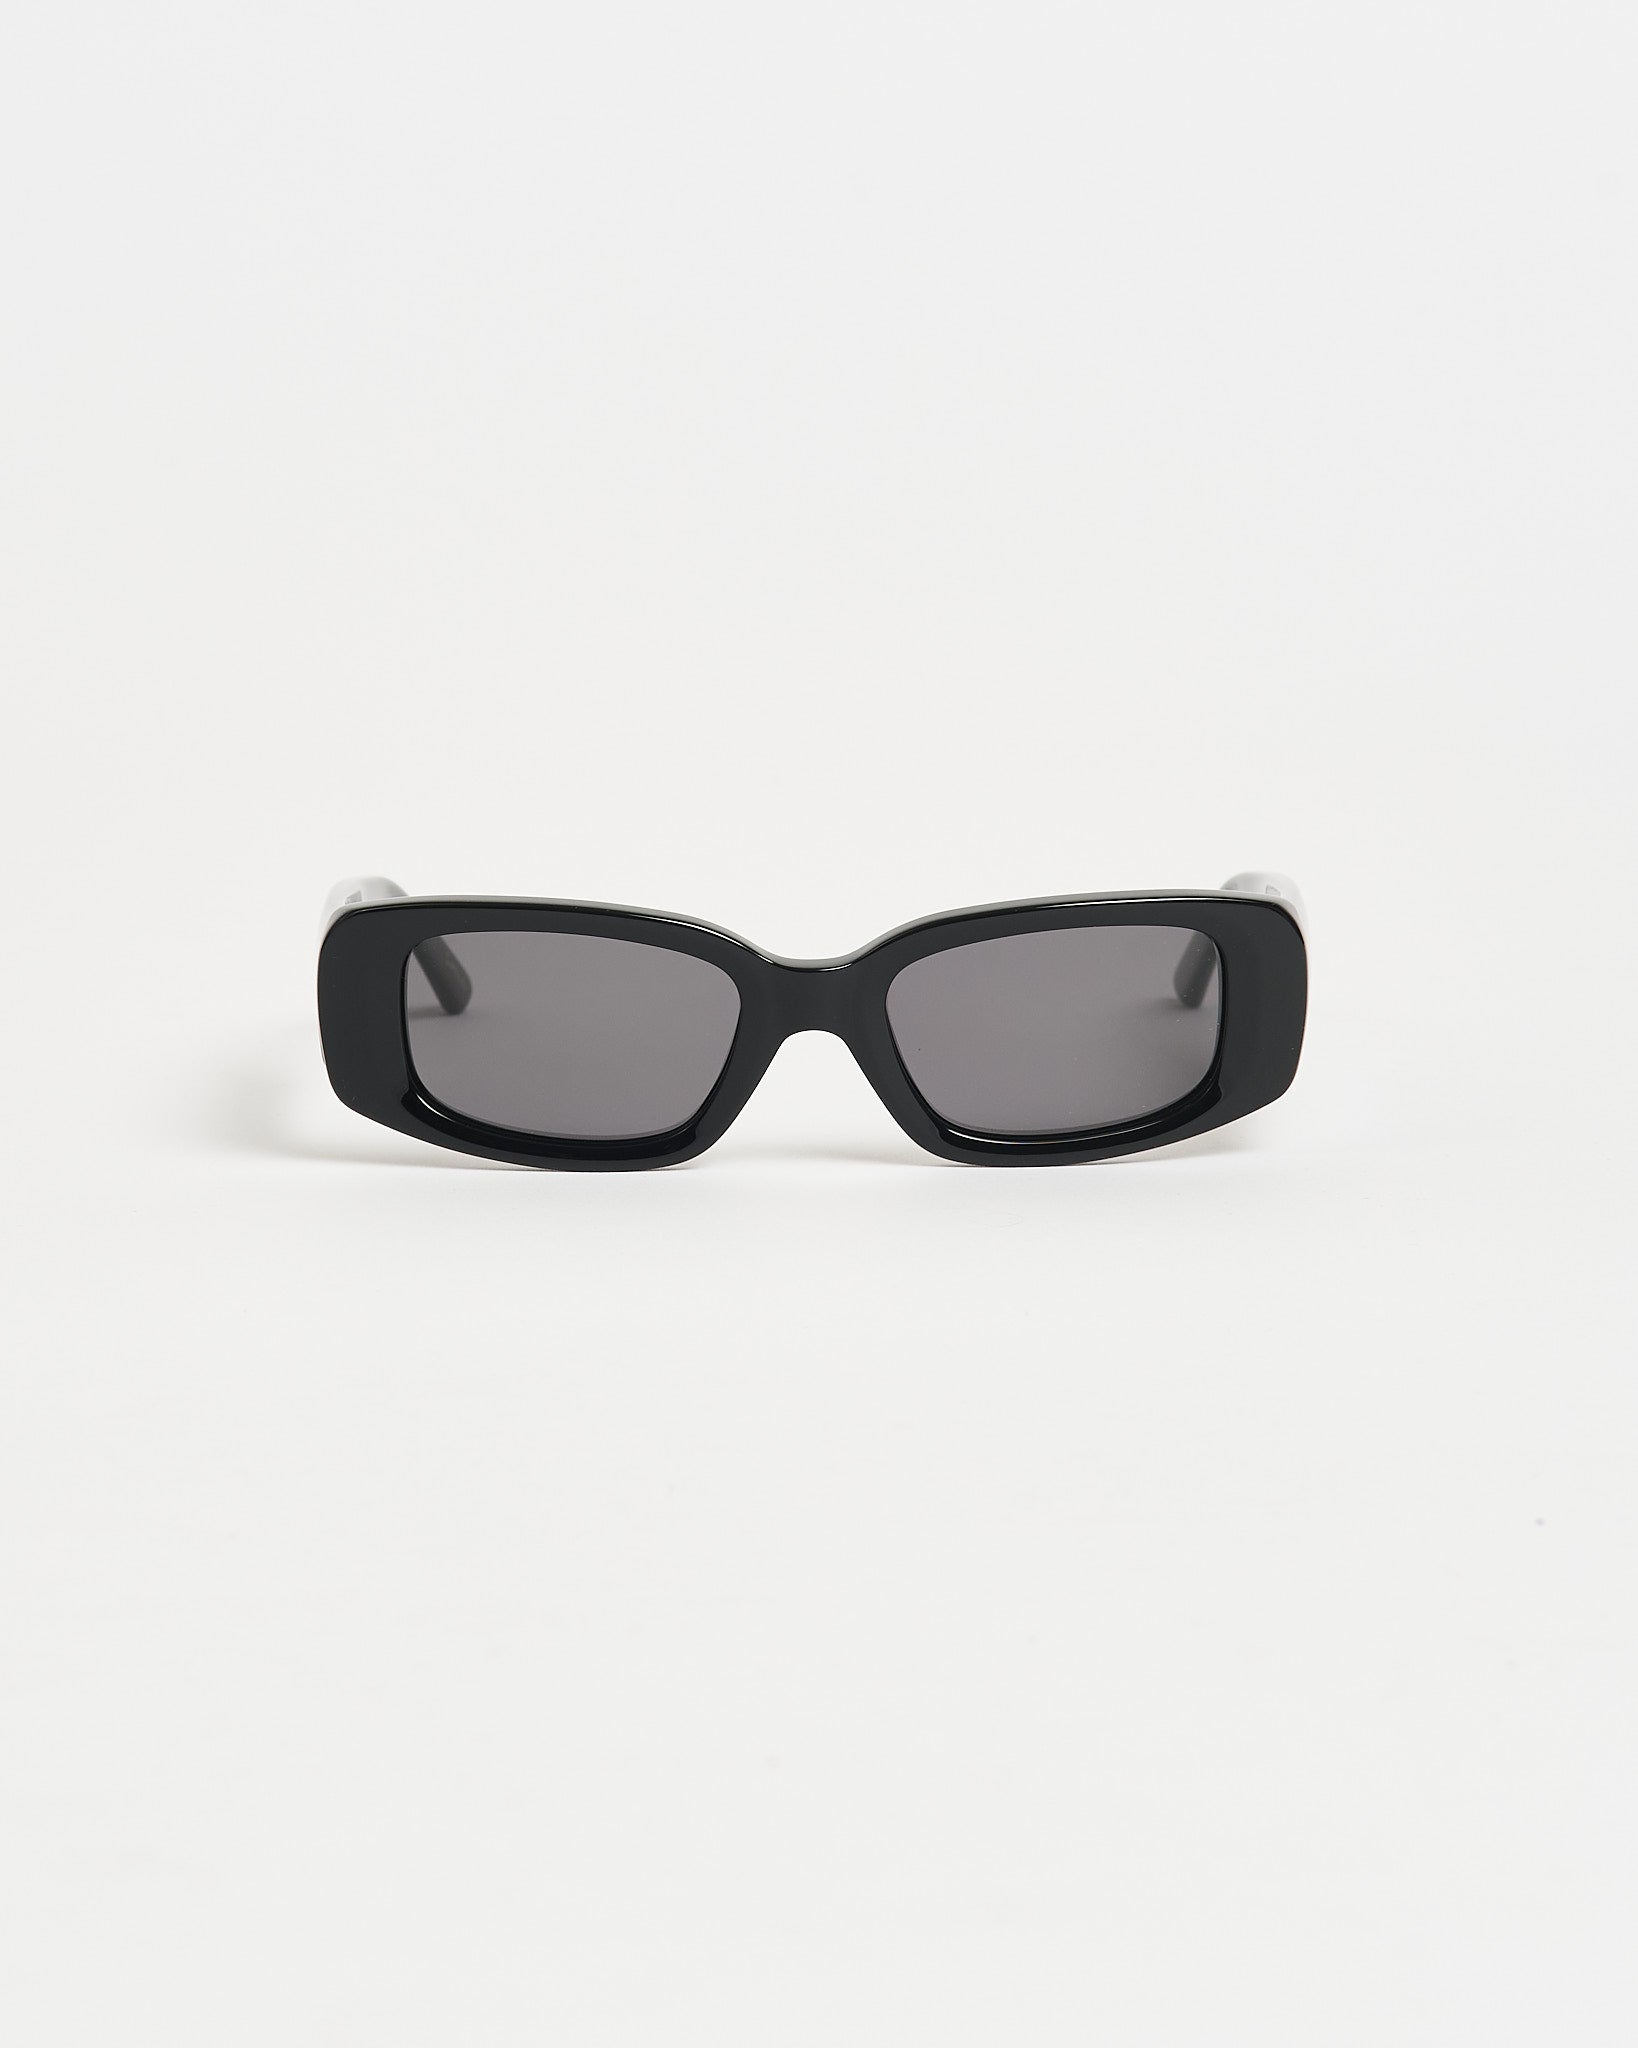 Mohawk General Store | Chimi | 10.2 Sunglasses in Black